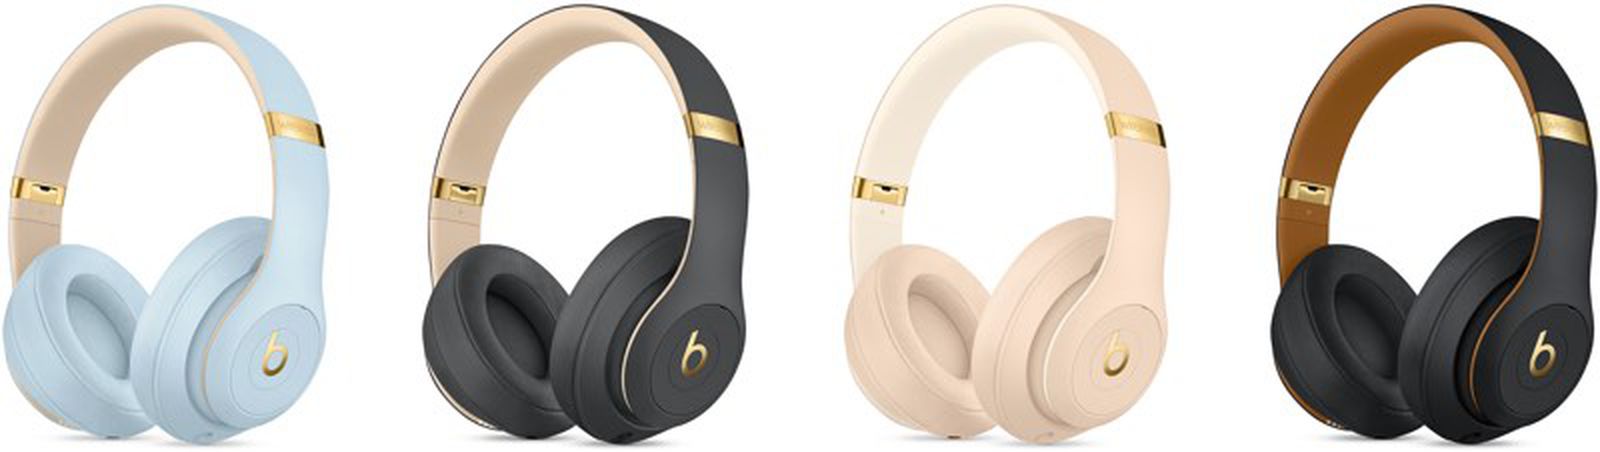 træk vejret Musling Jordbær Apple Offering $70 Off Beats Studio3 'Skyline' Wireless Headphones  Collection - MacRumors